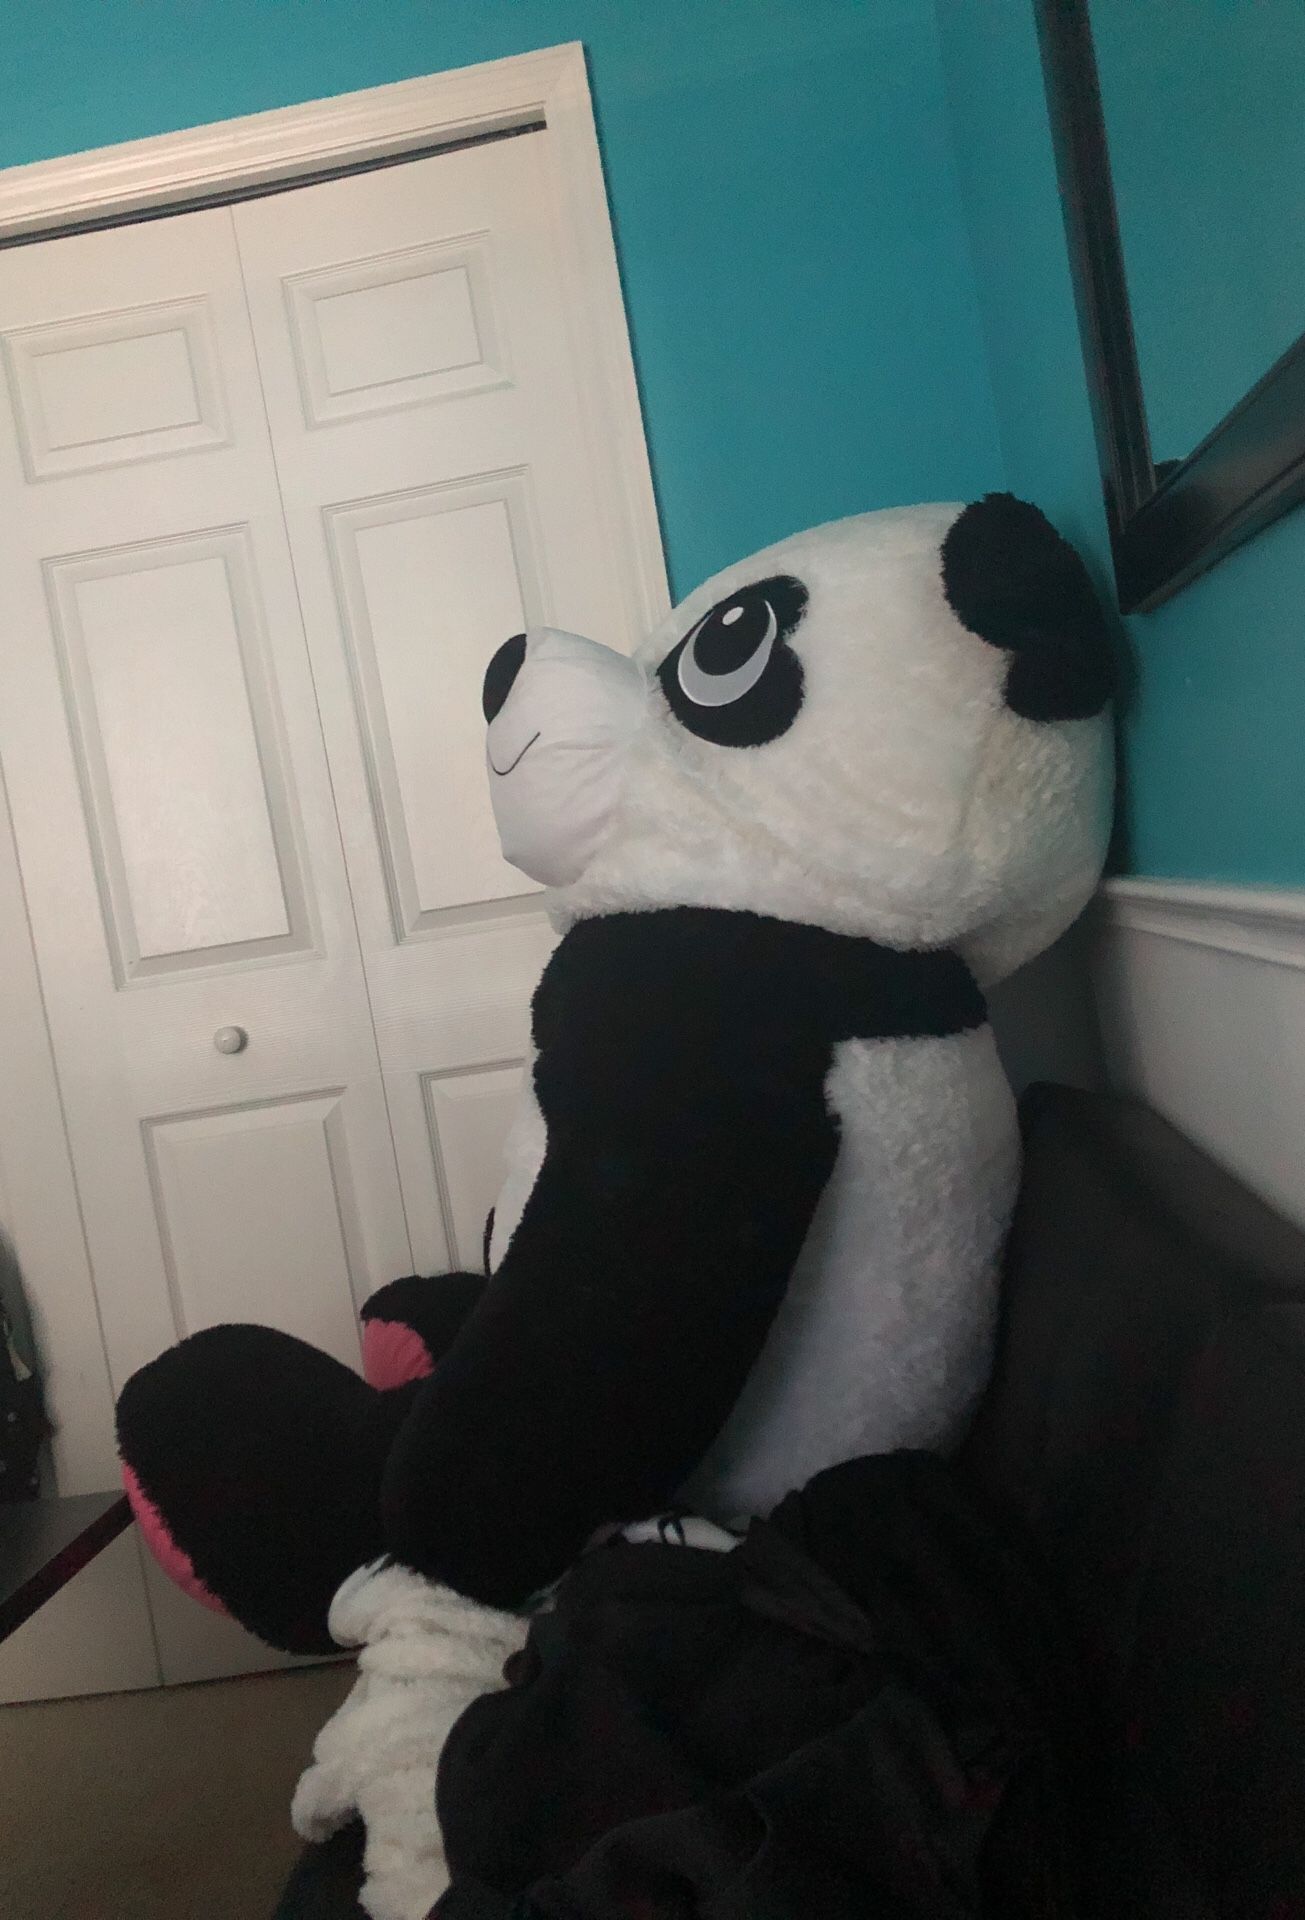 Giant stuffed panda